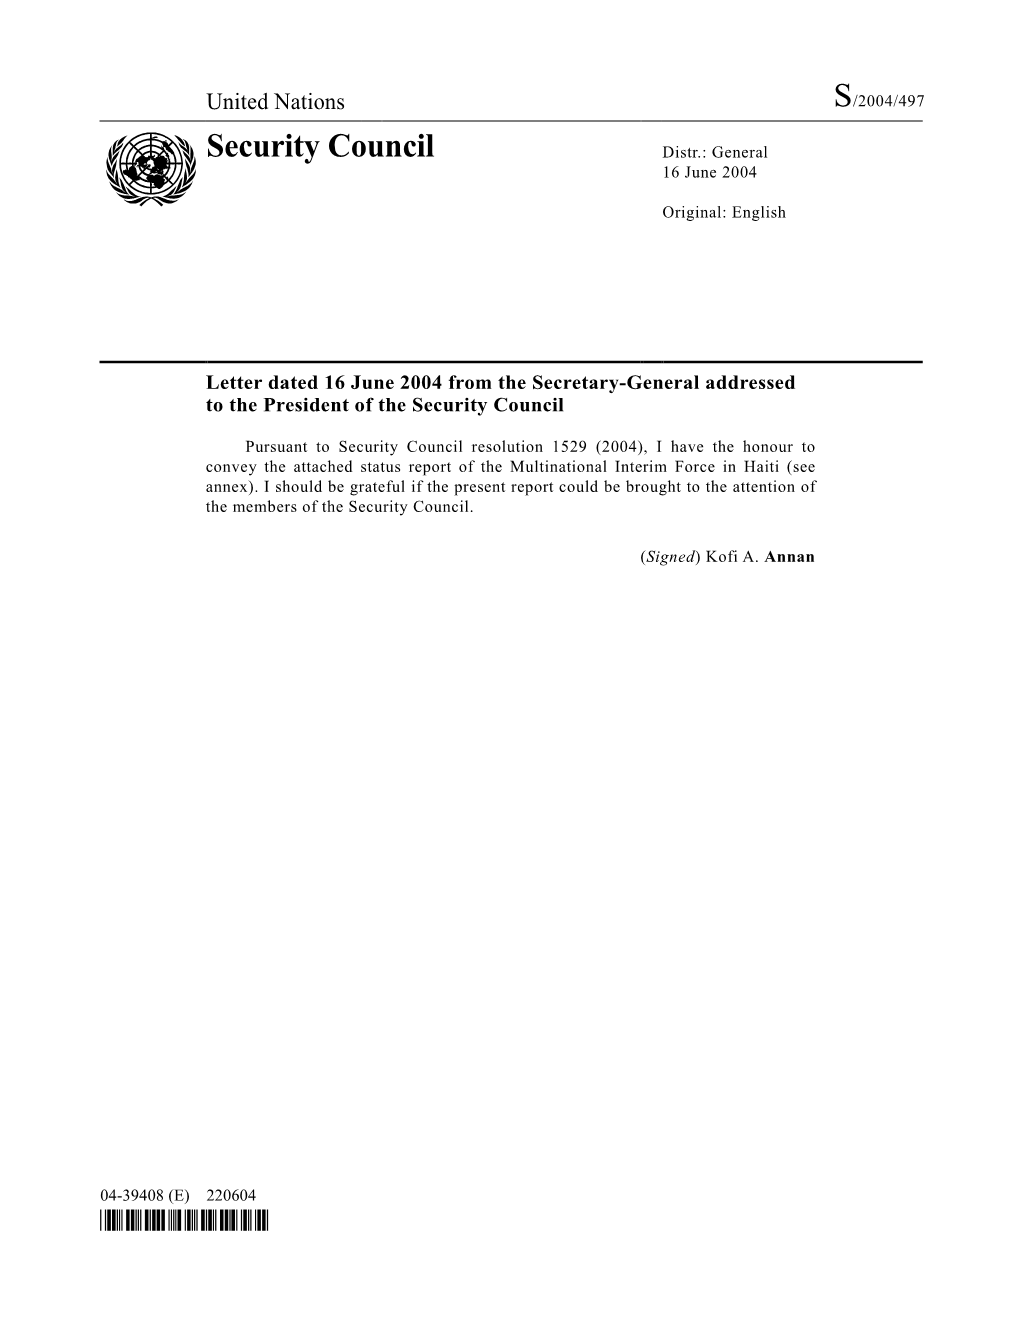 Security Council Distr.: General 16 June 2004